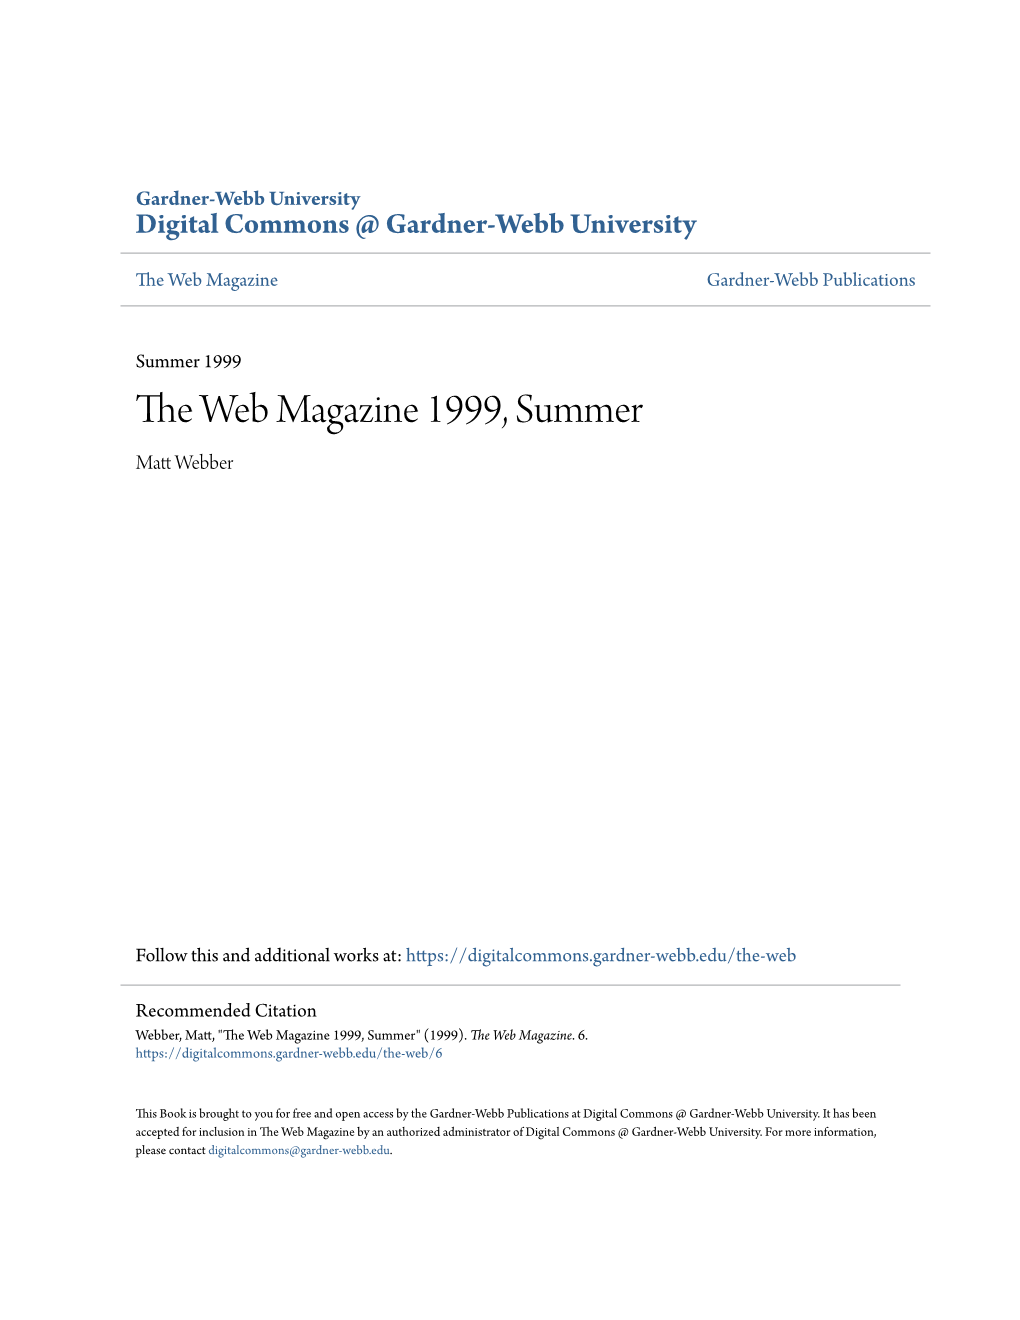 The Web Magazine 1999, Summer